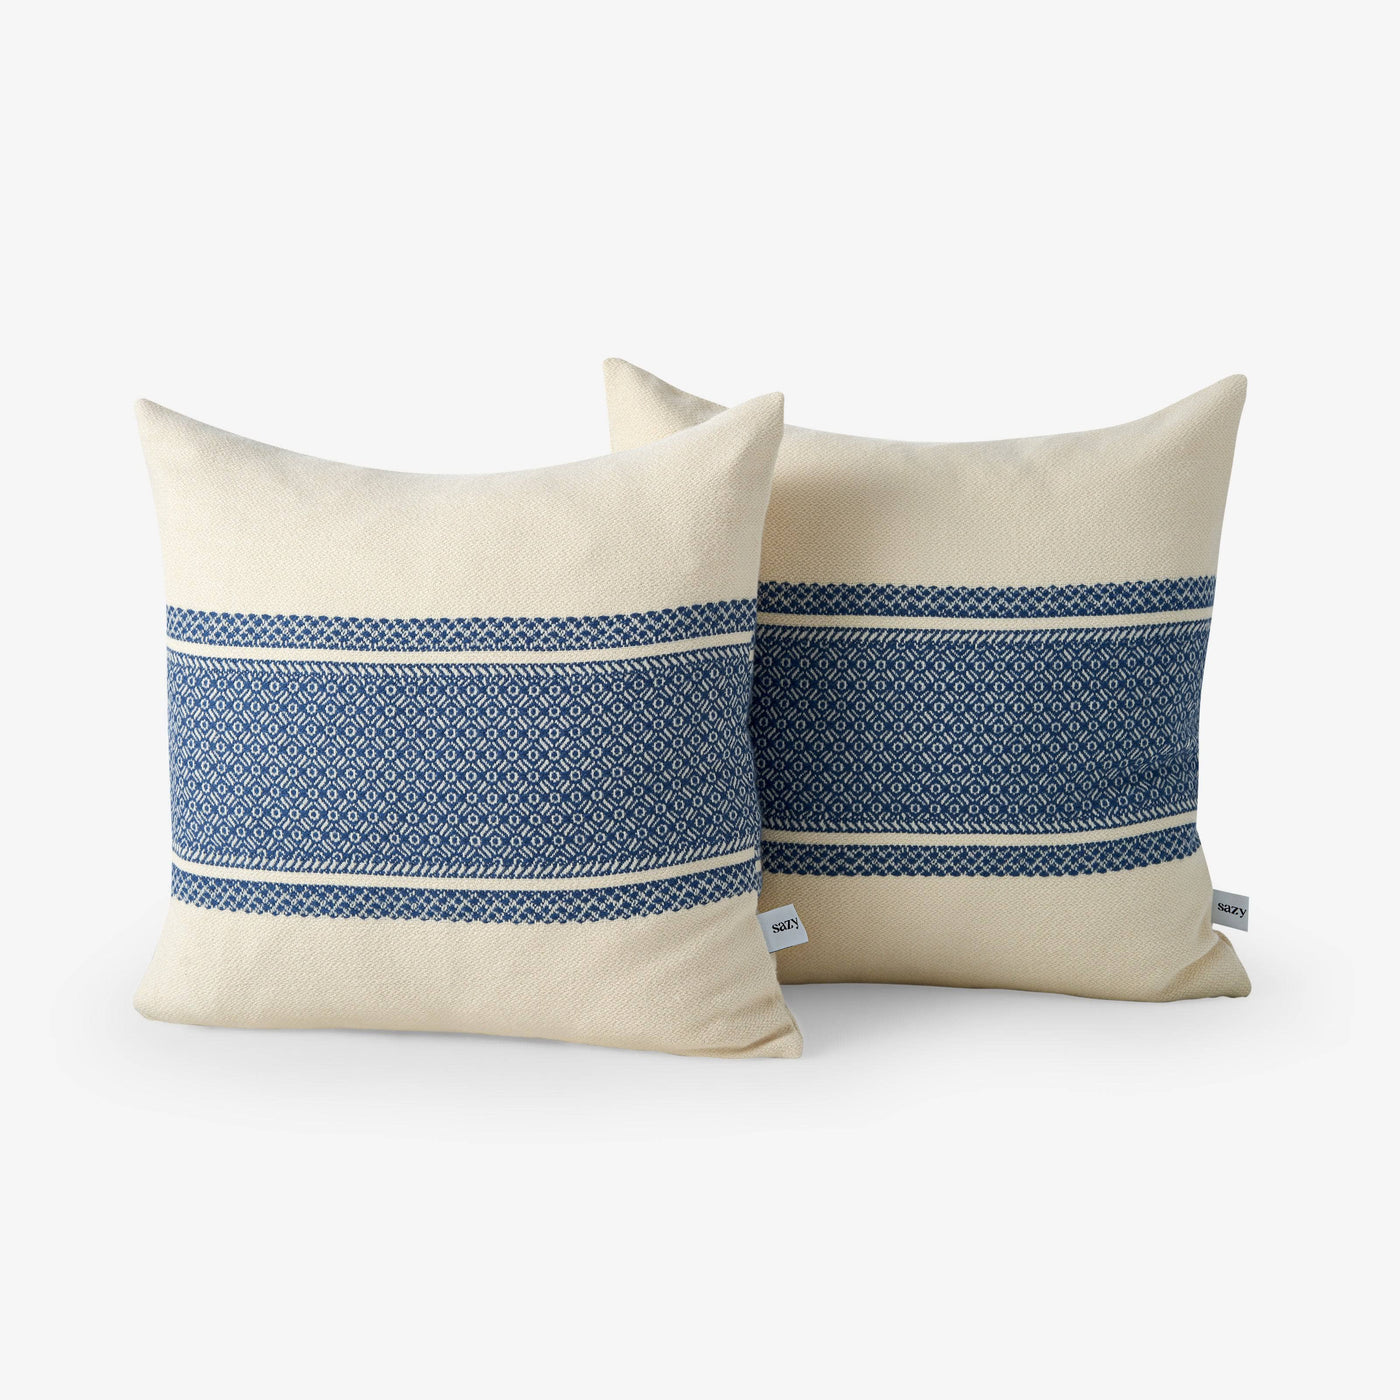 Mediterranean Set Of 2 Border Striped Soft Cushion Covers, Blue, 43x43 cm Cushion Covers sazy.com